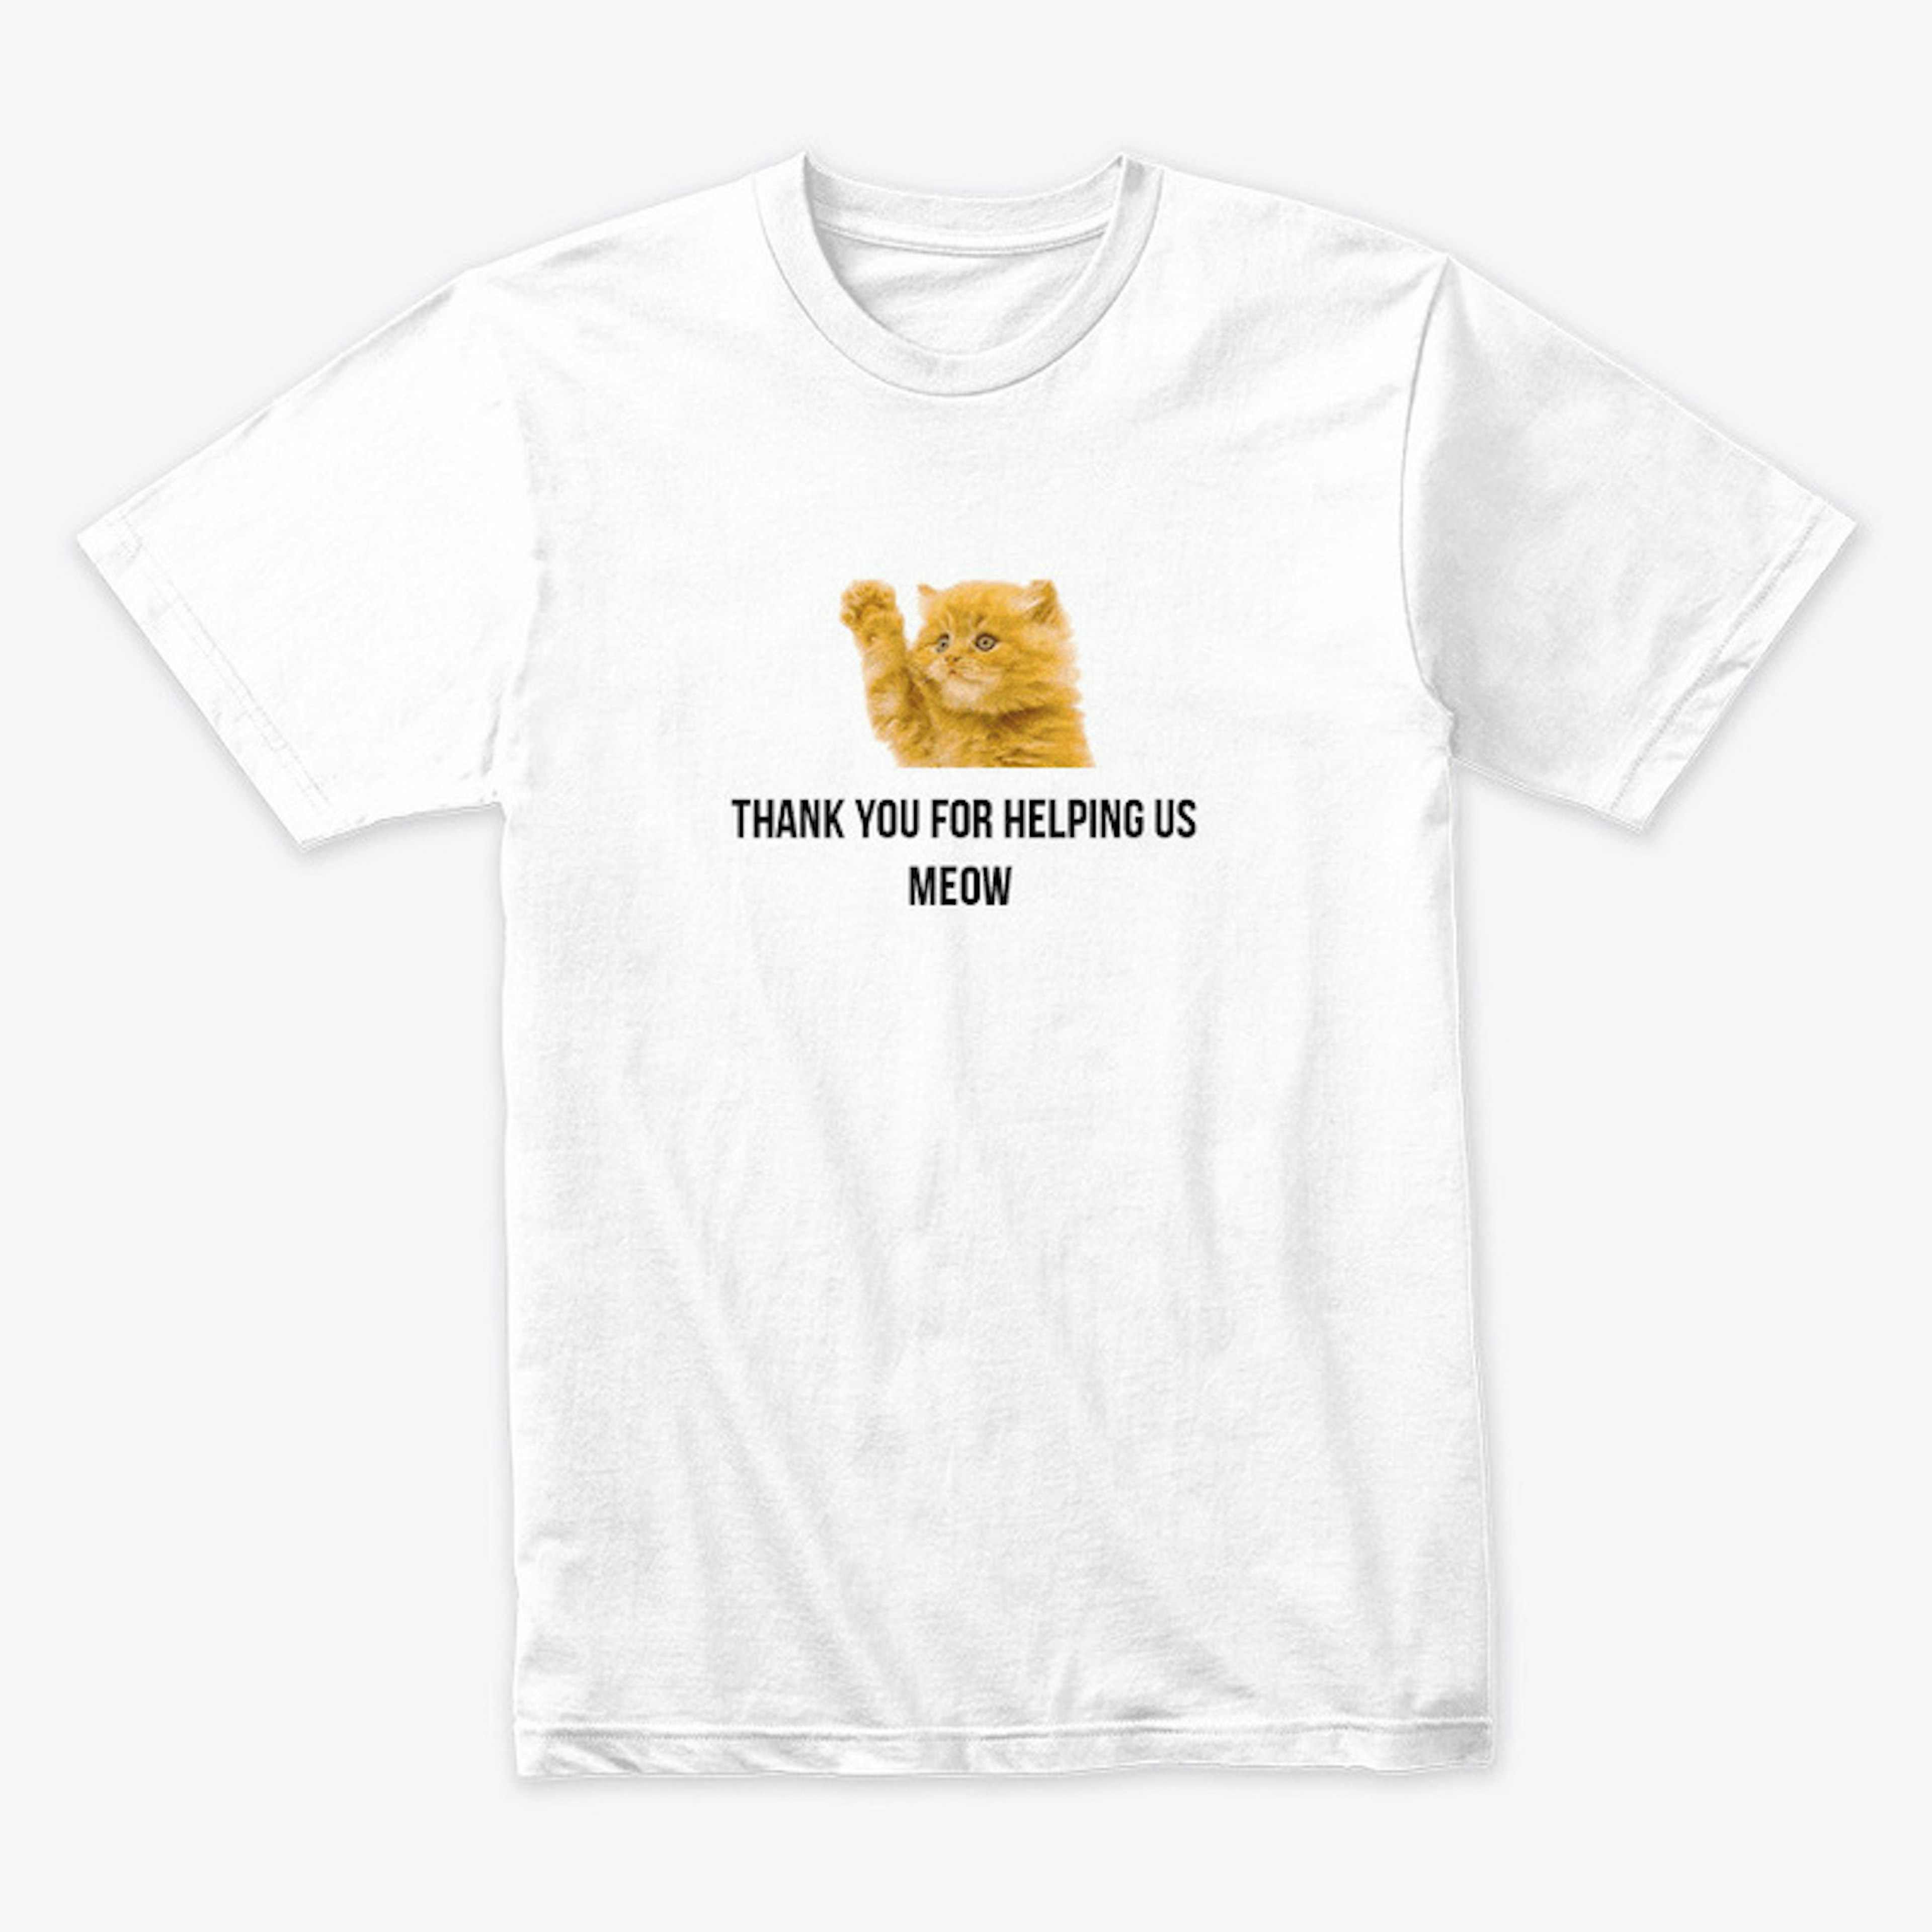 Men's T-Shirt (thank you)